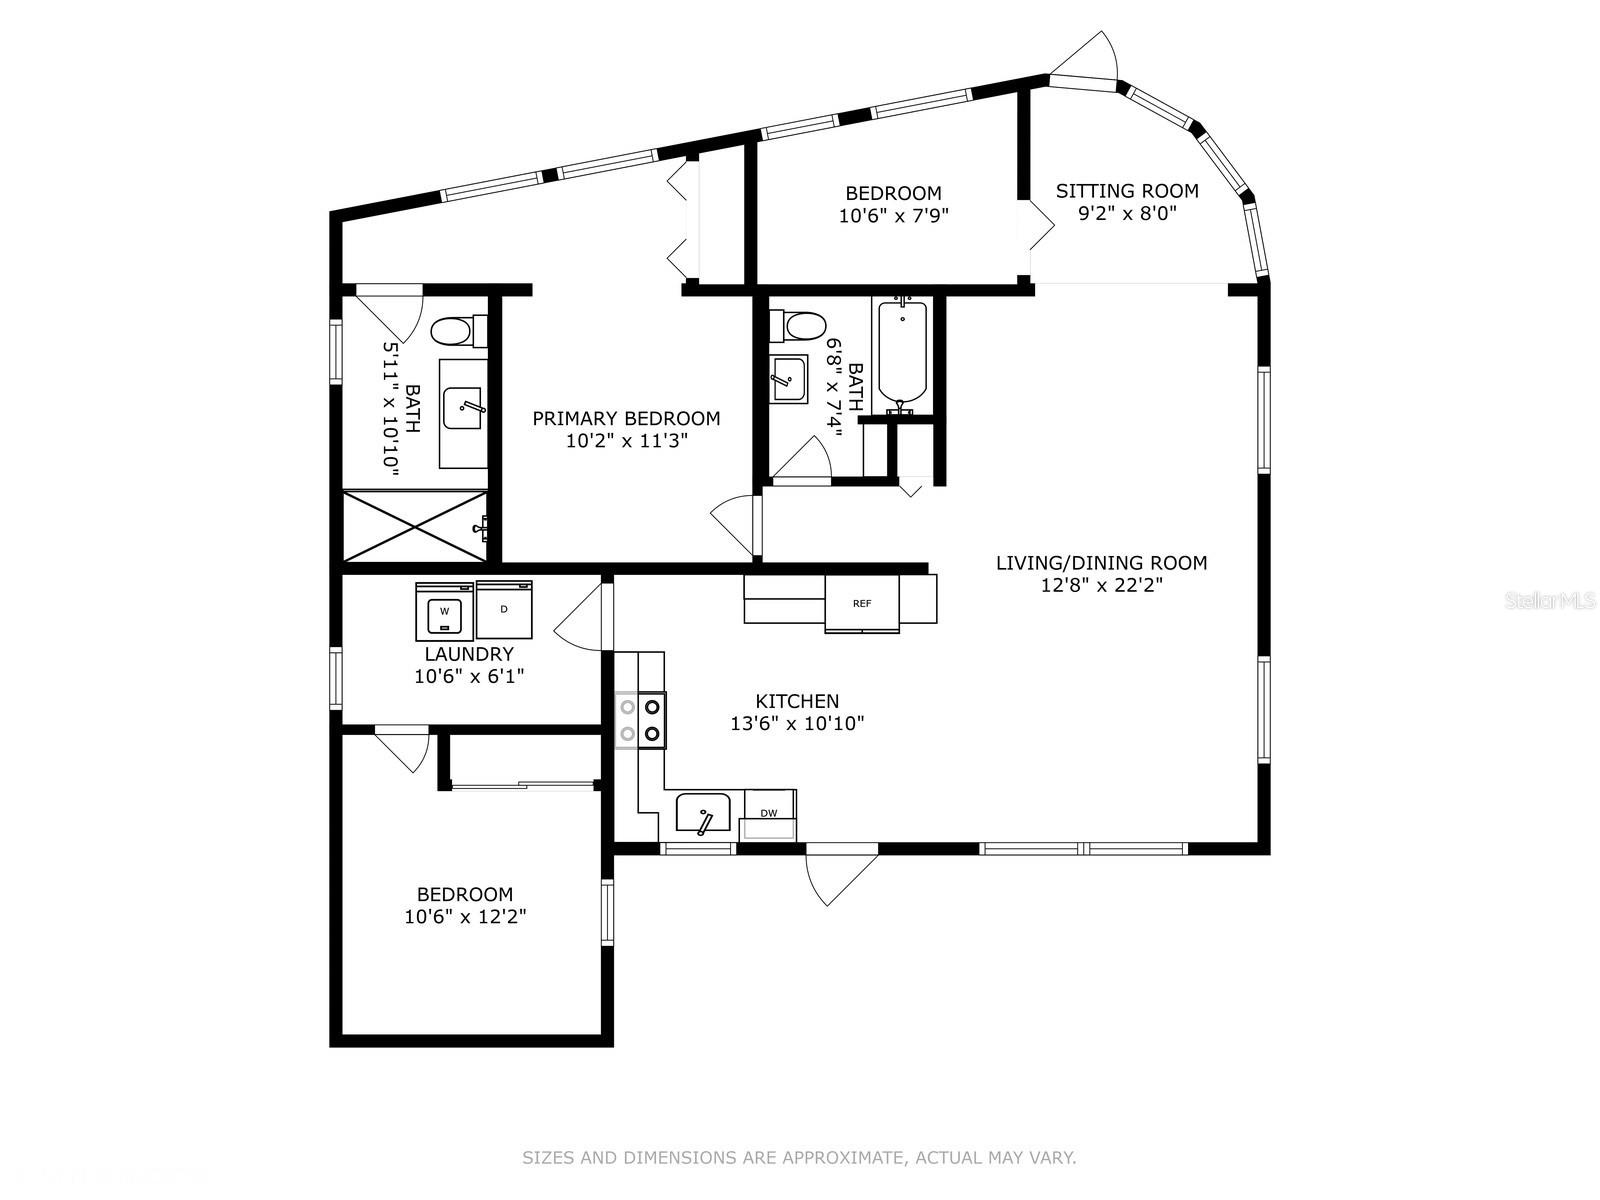 19806 Floor Plan (approximate measurements)